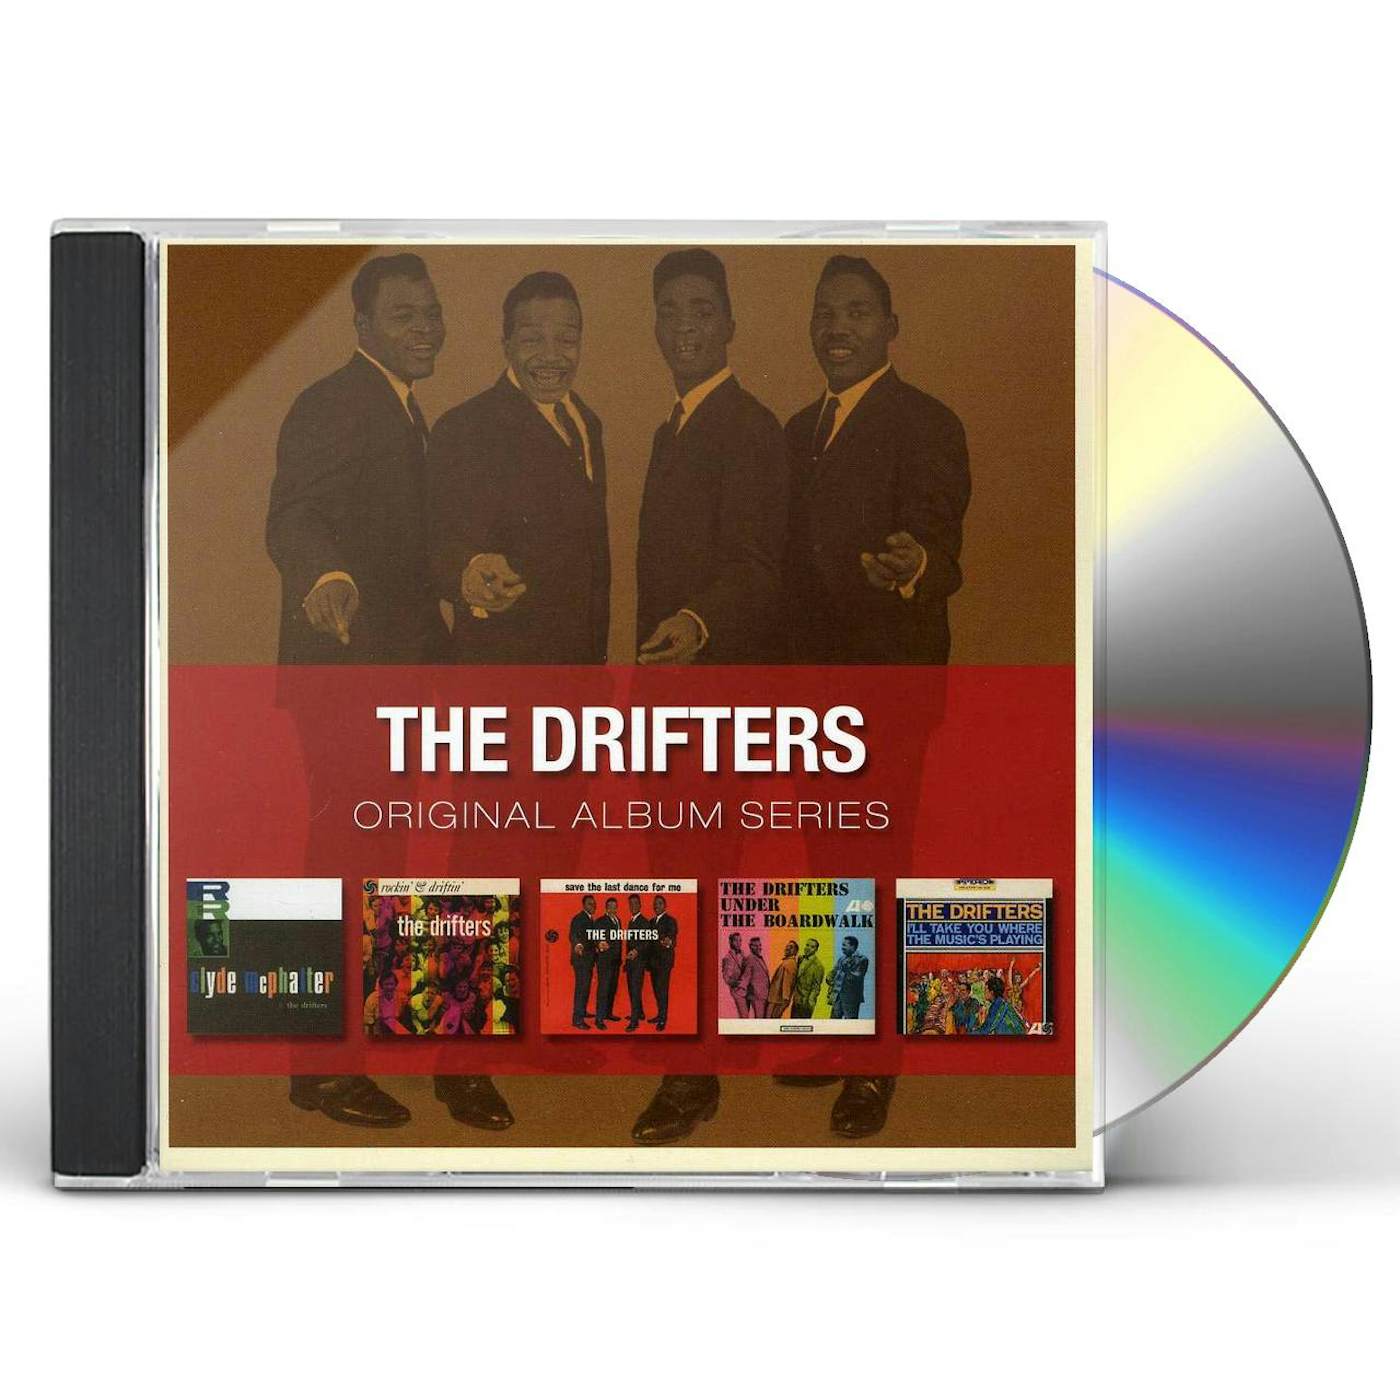 The Drifters ORIGINAL ALBUM SERIES CD